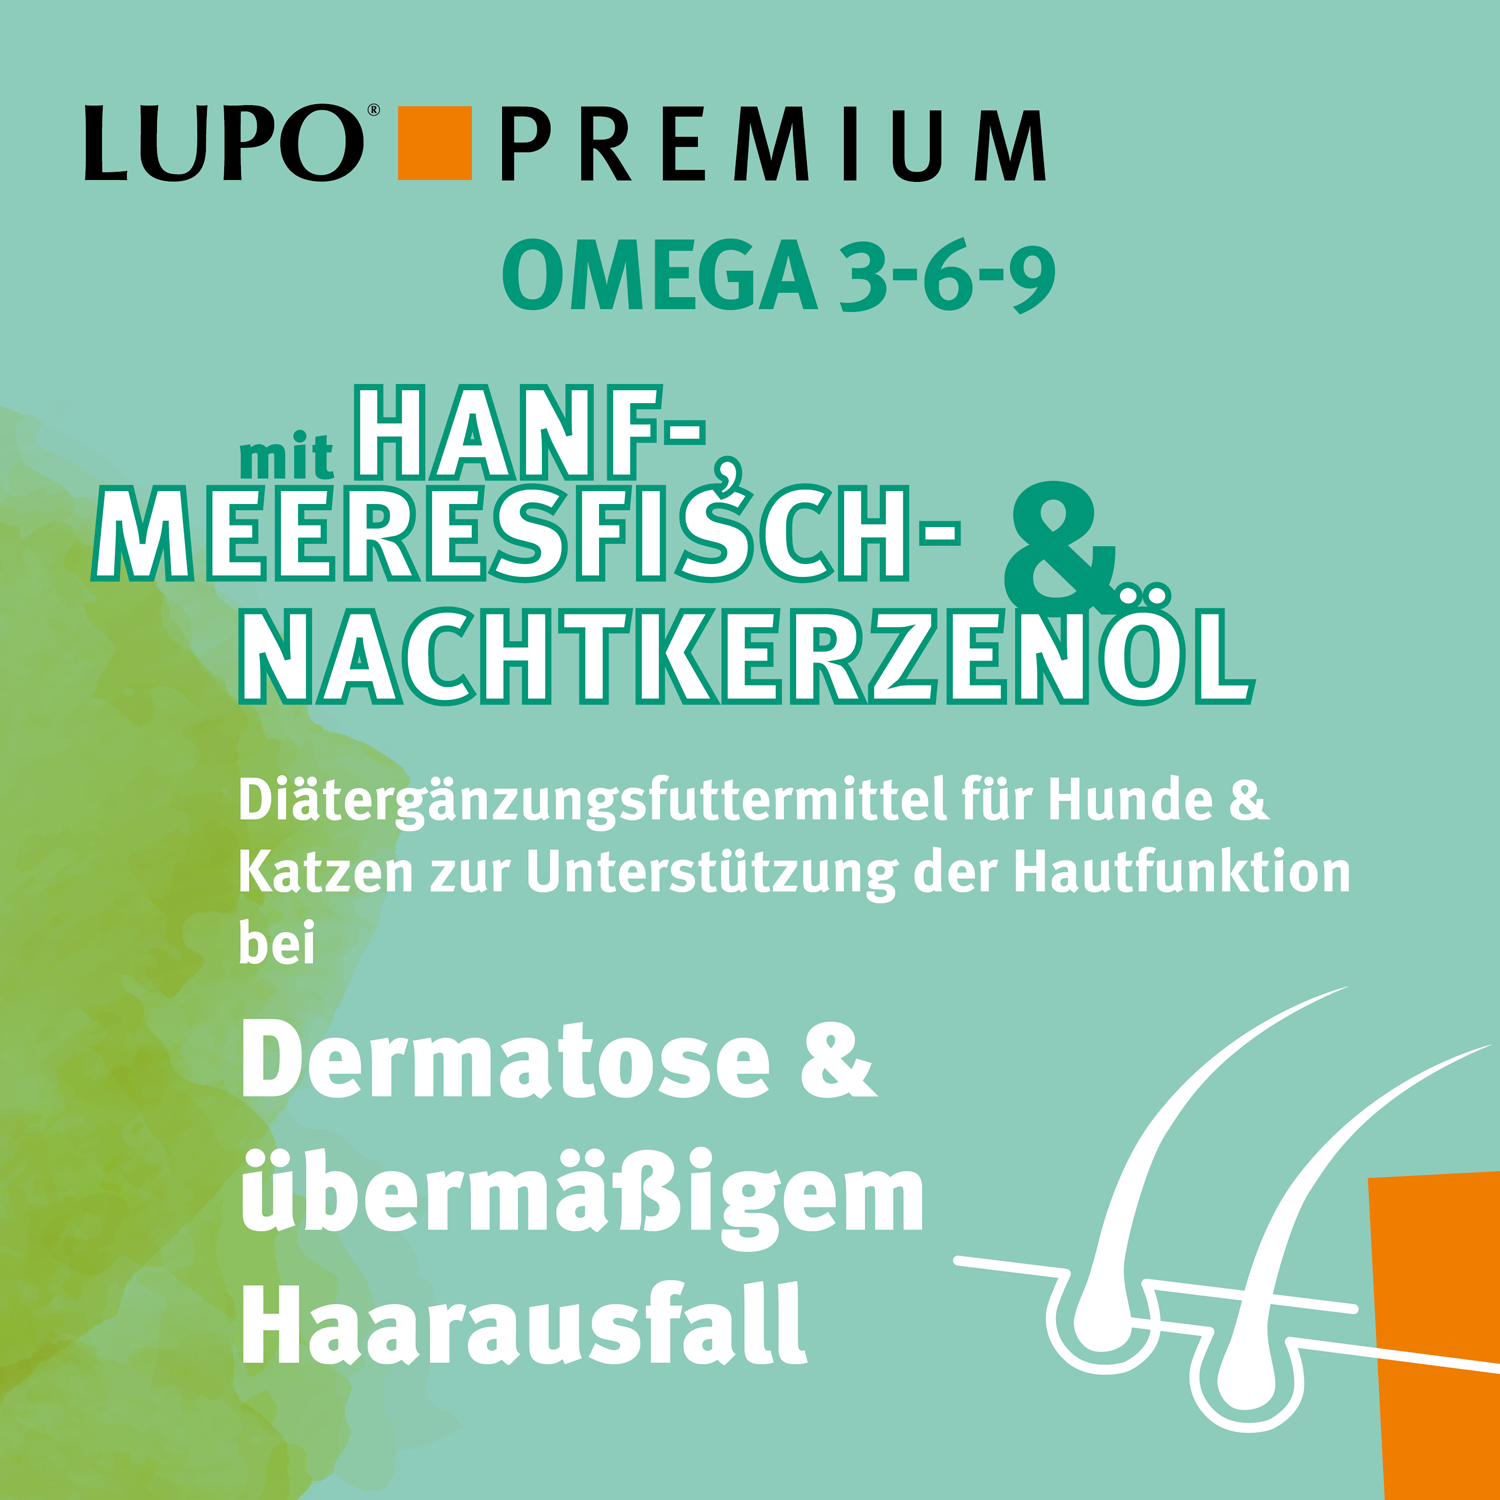 LUPO OMEGA 369 Premium 1000 ml